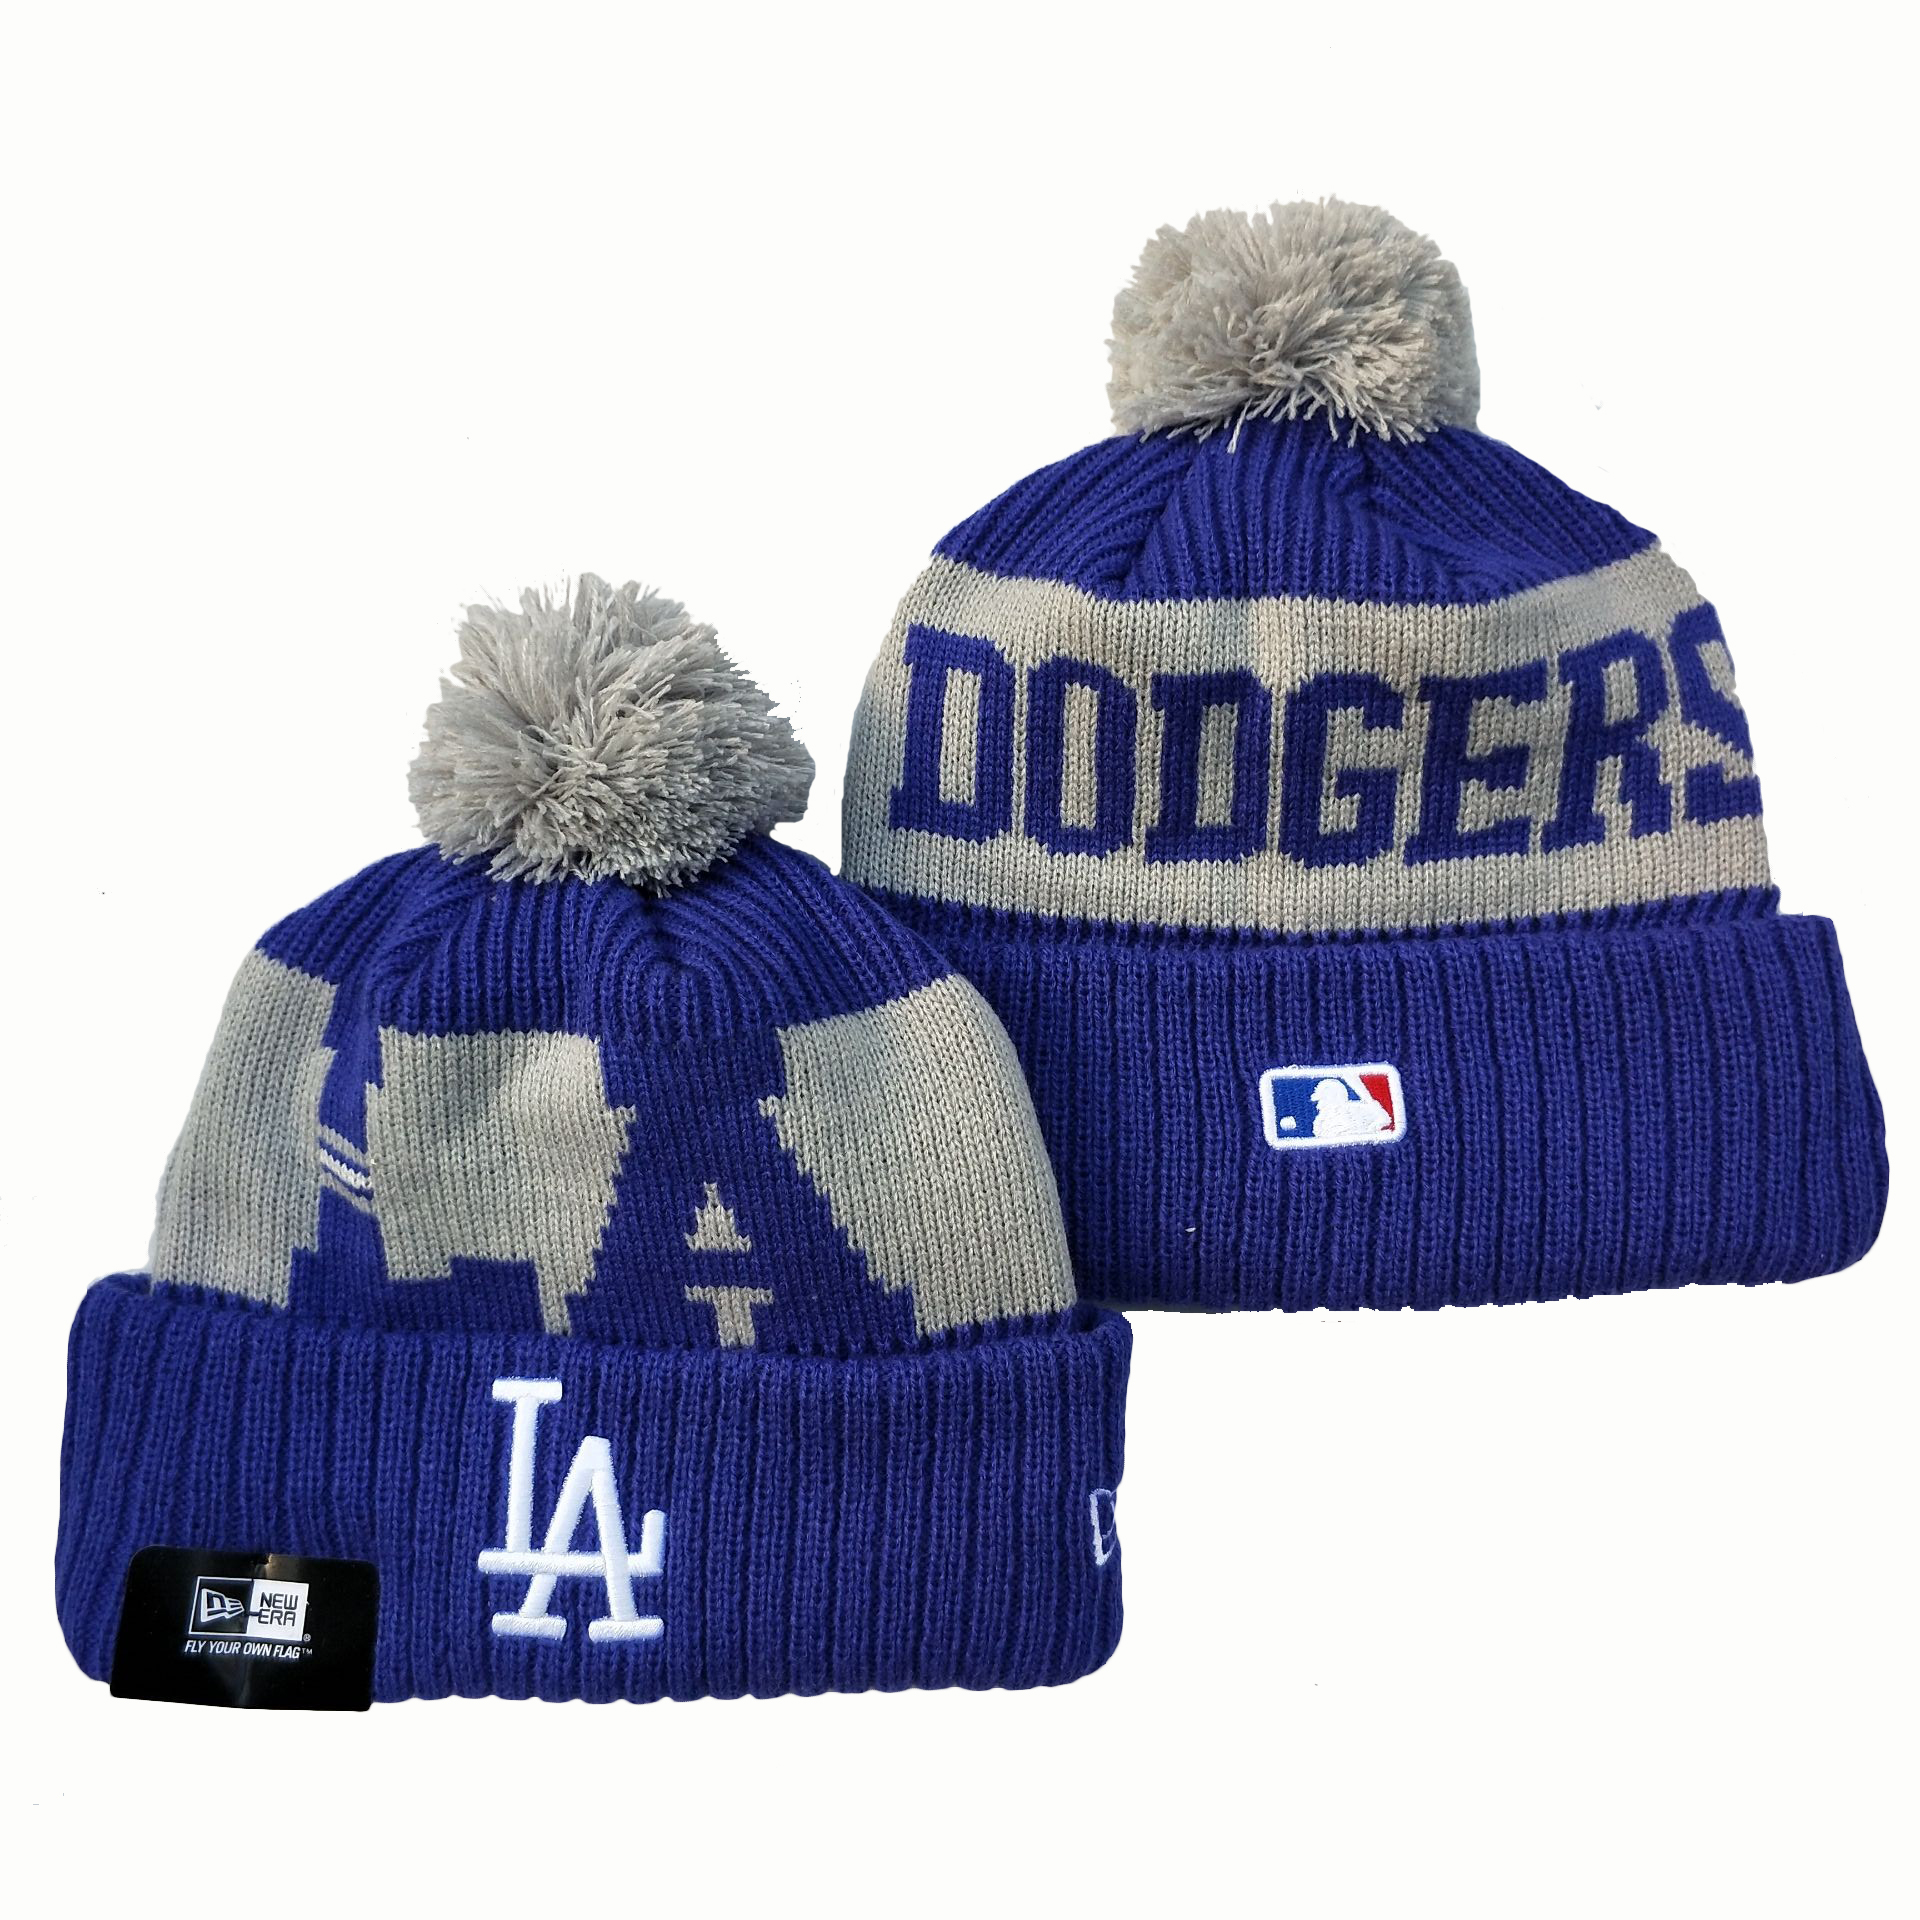 Los Angeles Dodgers Knit Hats 012